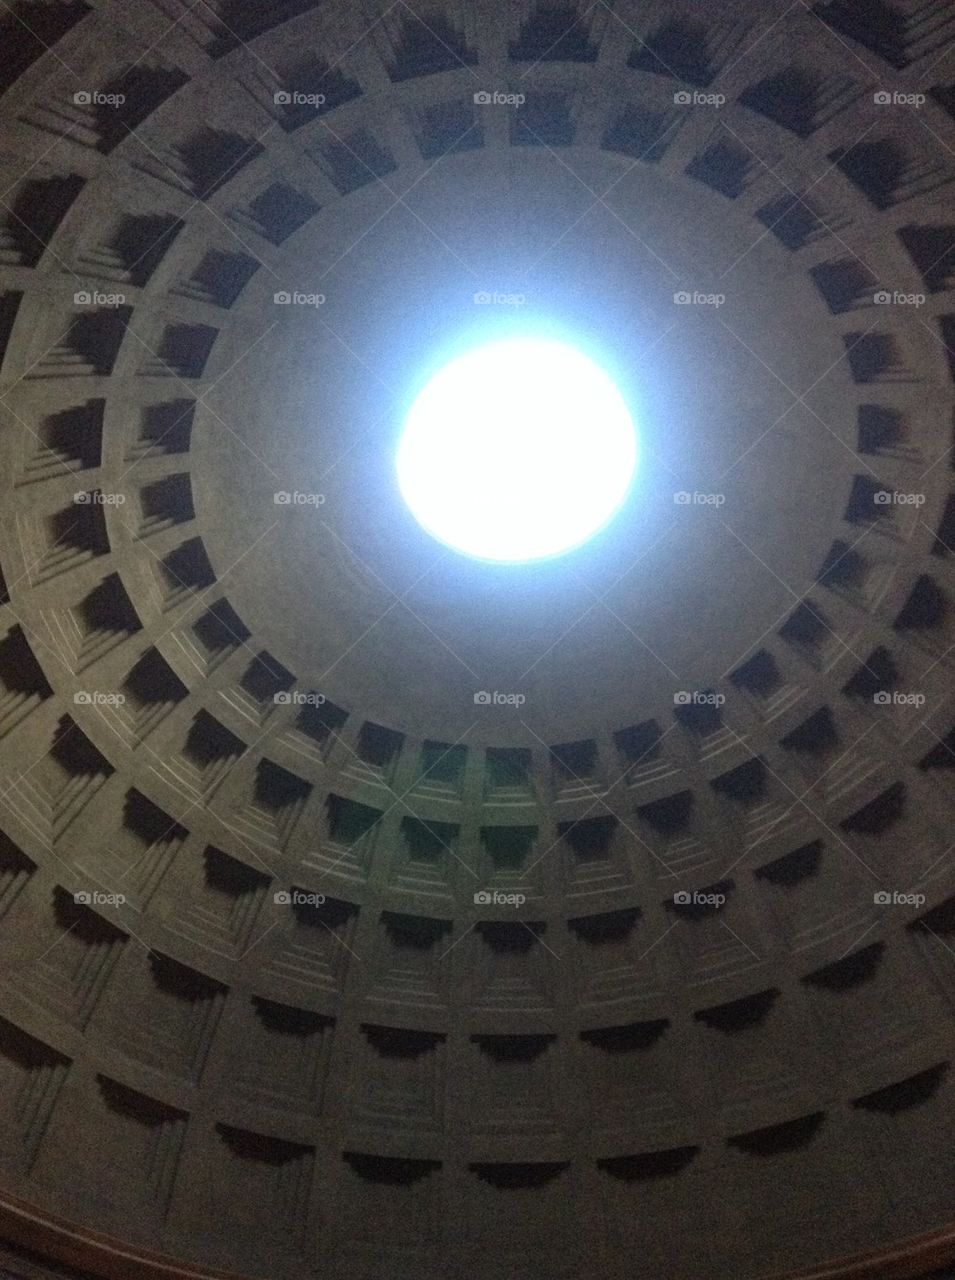 The pantheon